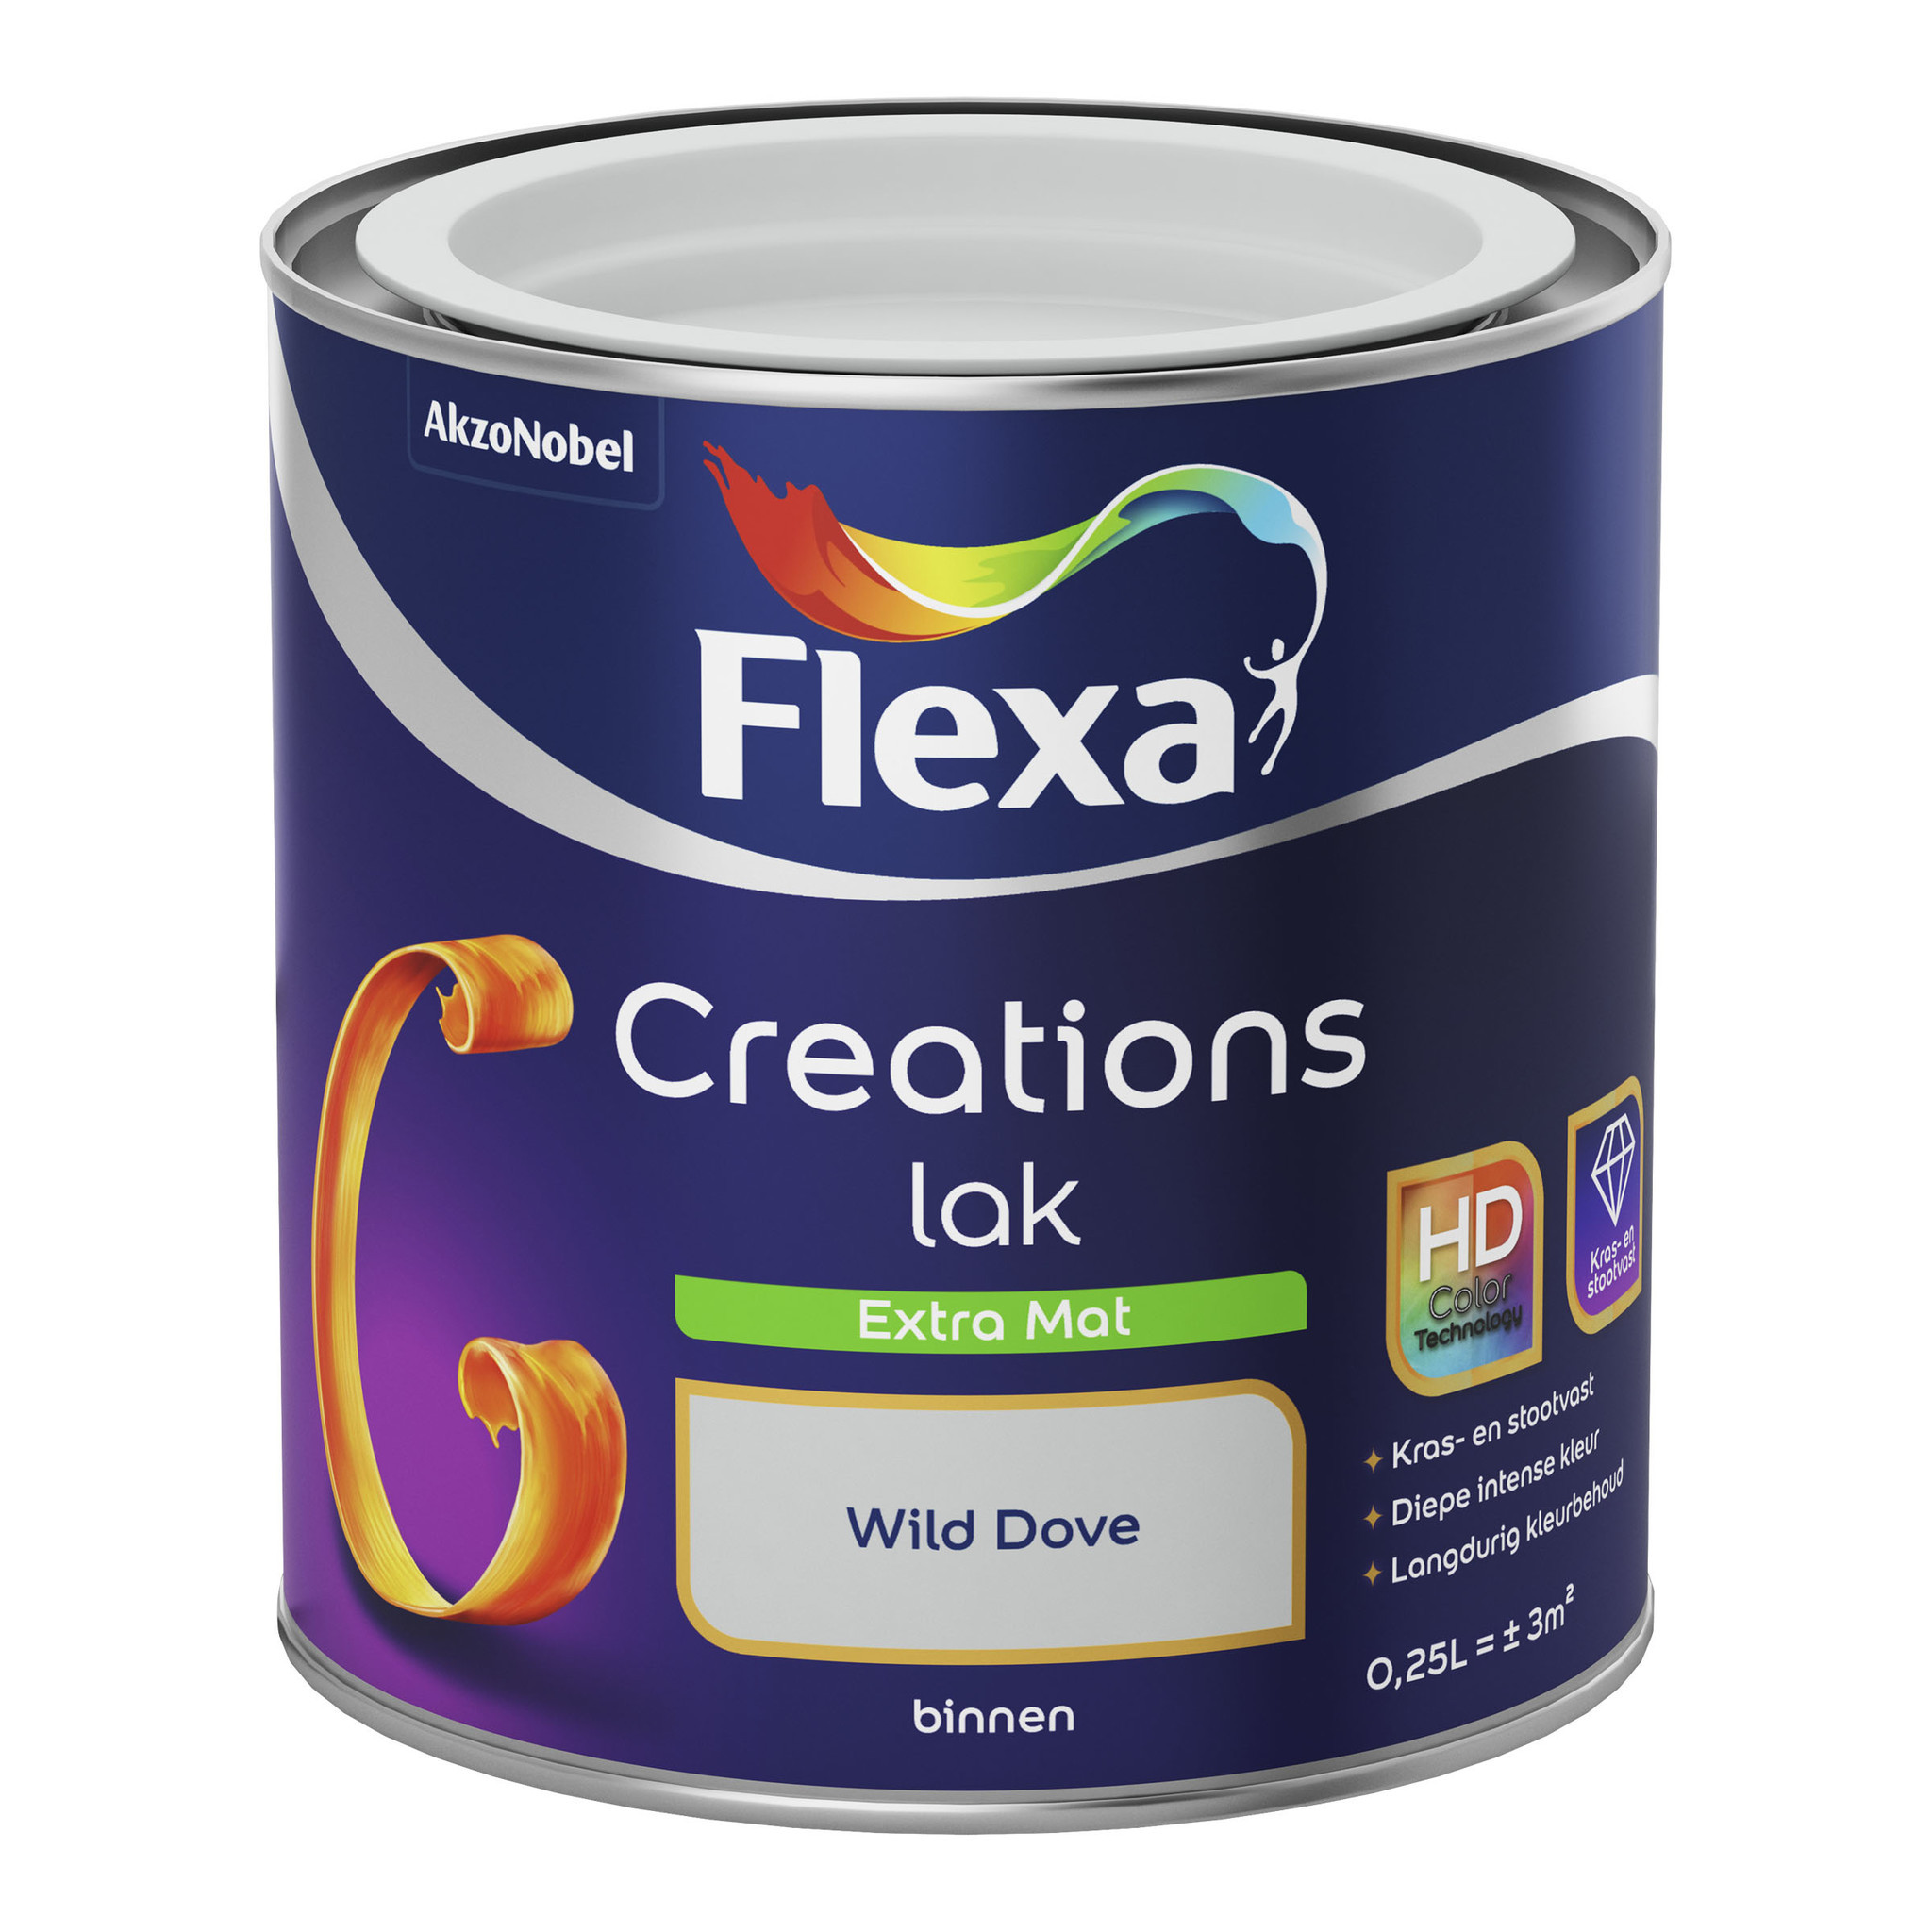 Flexa Creations Lak Extra Mat - Wild Dove